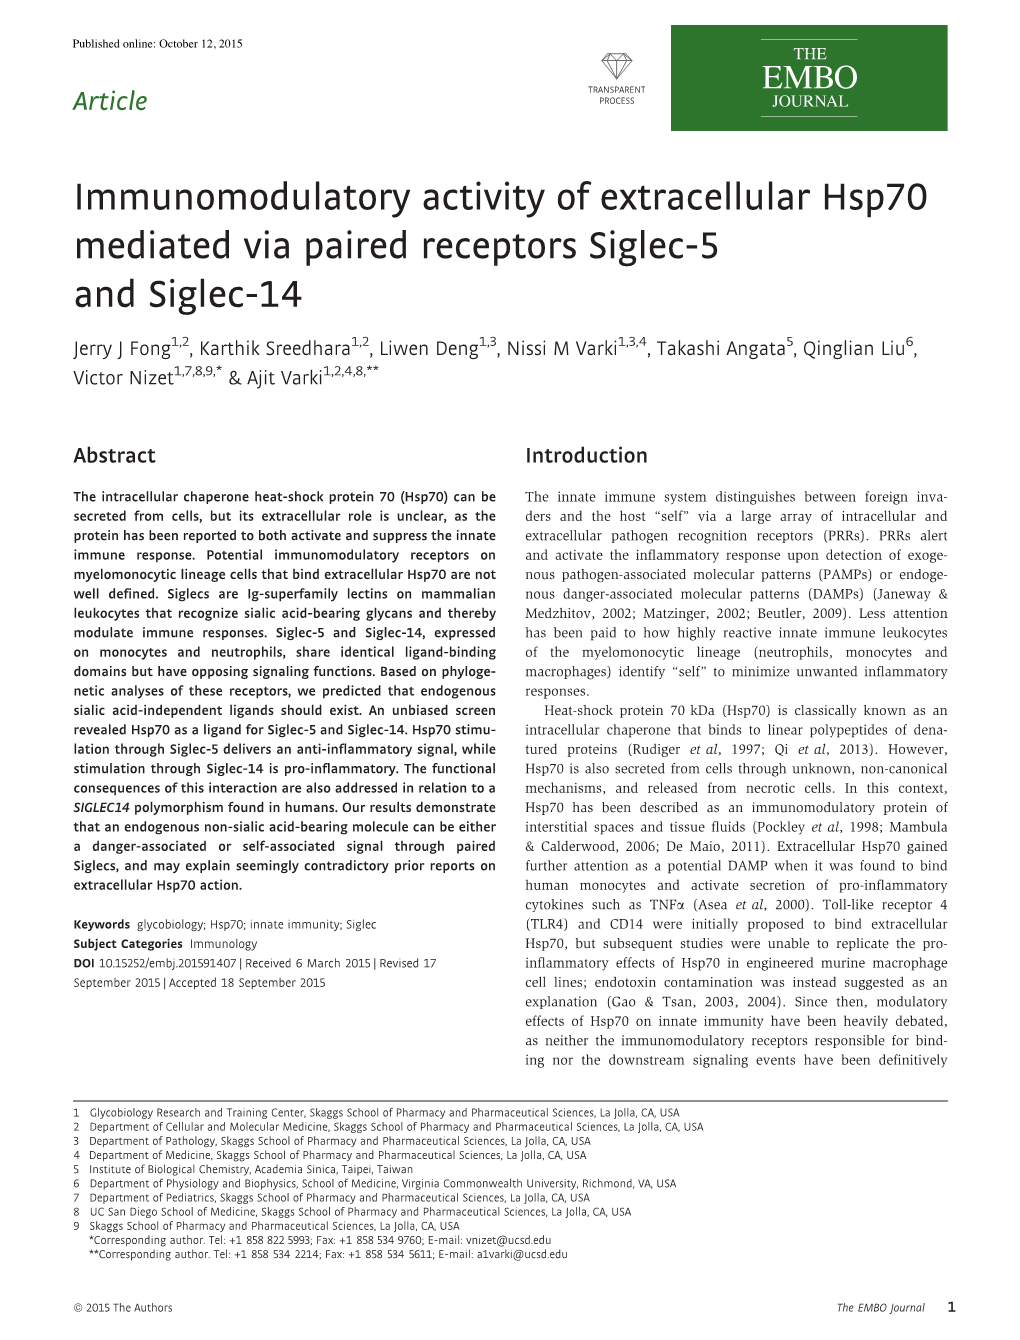 Immunomodulatory Activity of Extracellular Hsp70 Mediated Via Paired Receptors Siglec-5 and Siglec-14